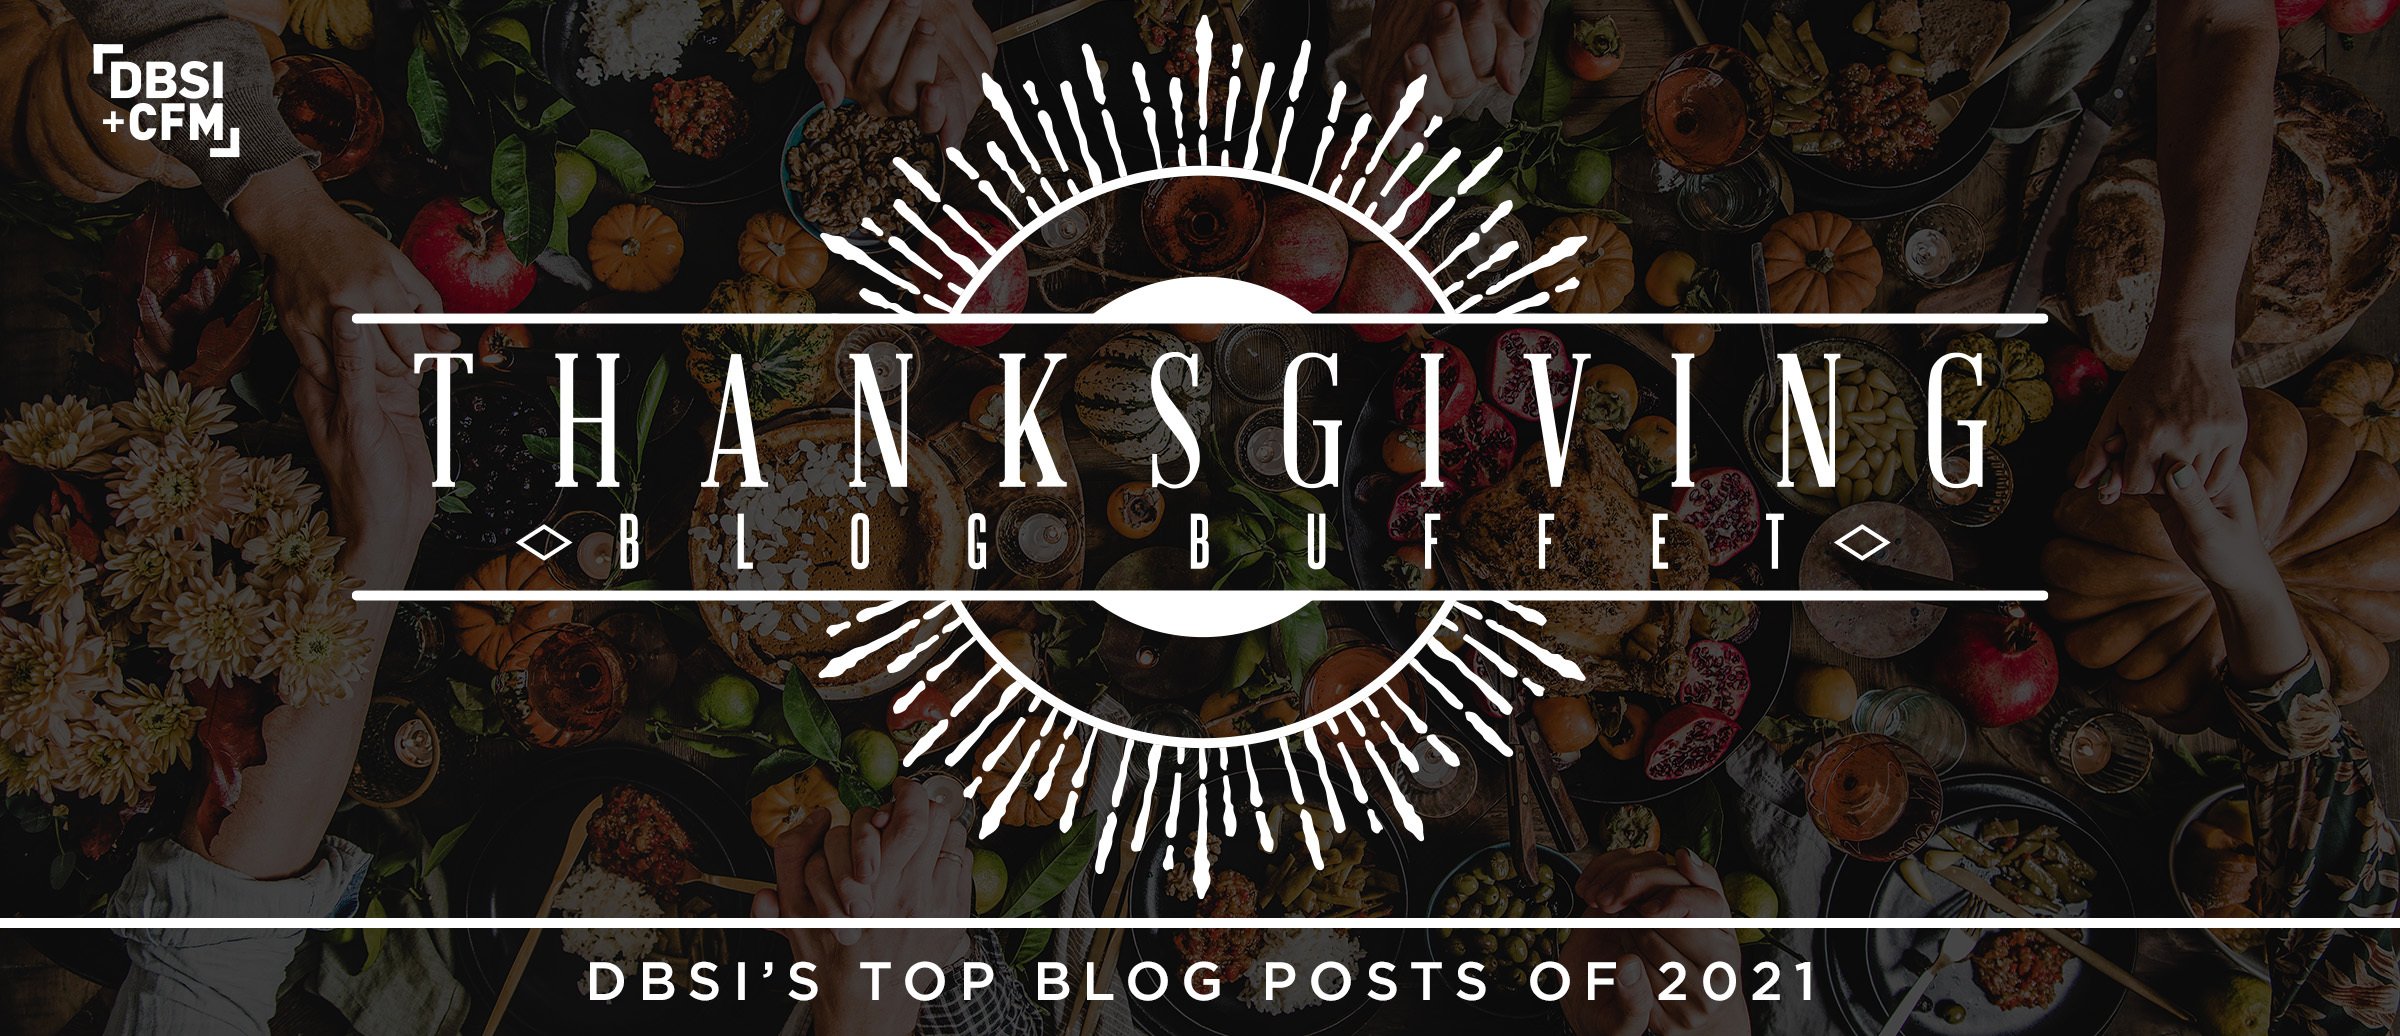 Thanksgving Blog Header-2021